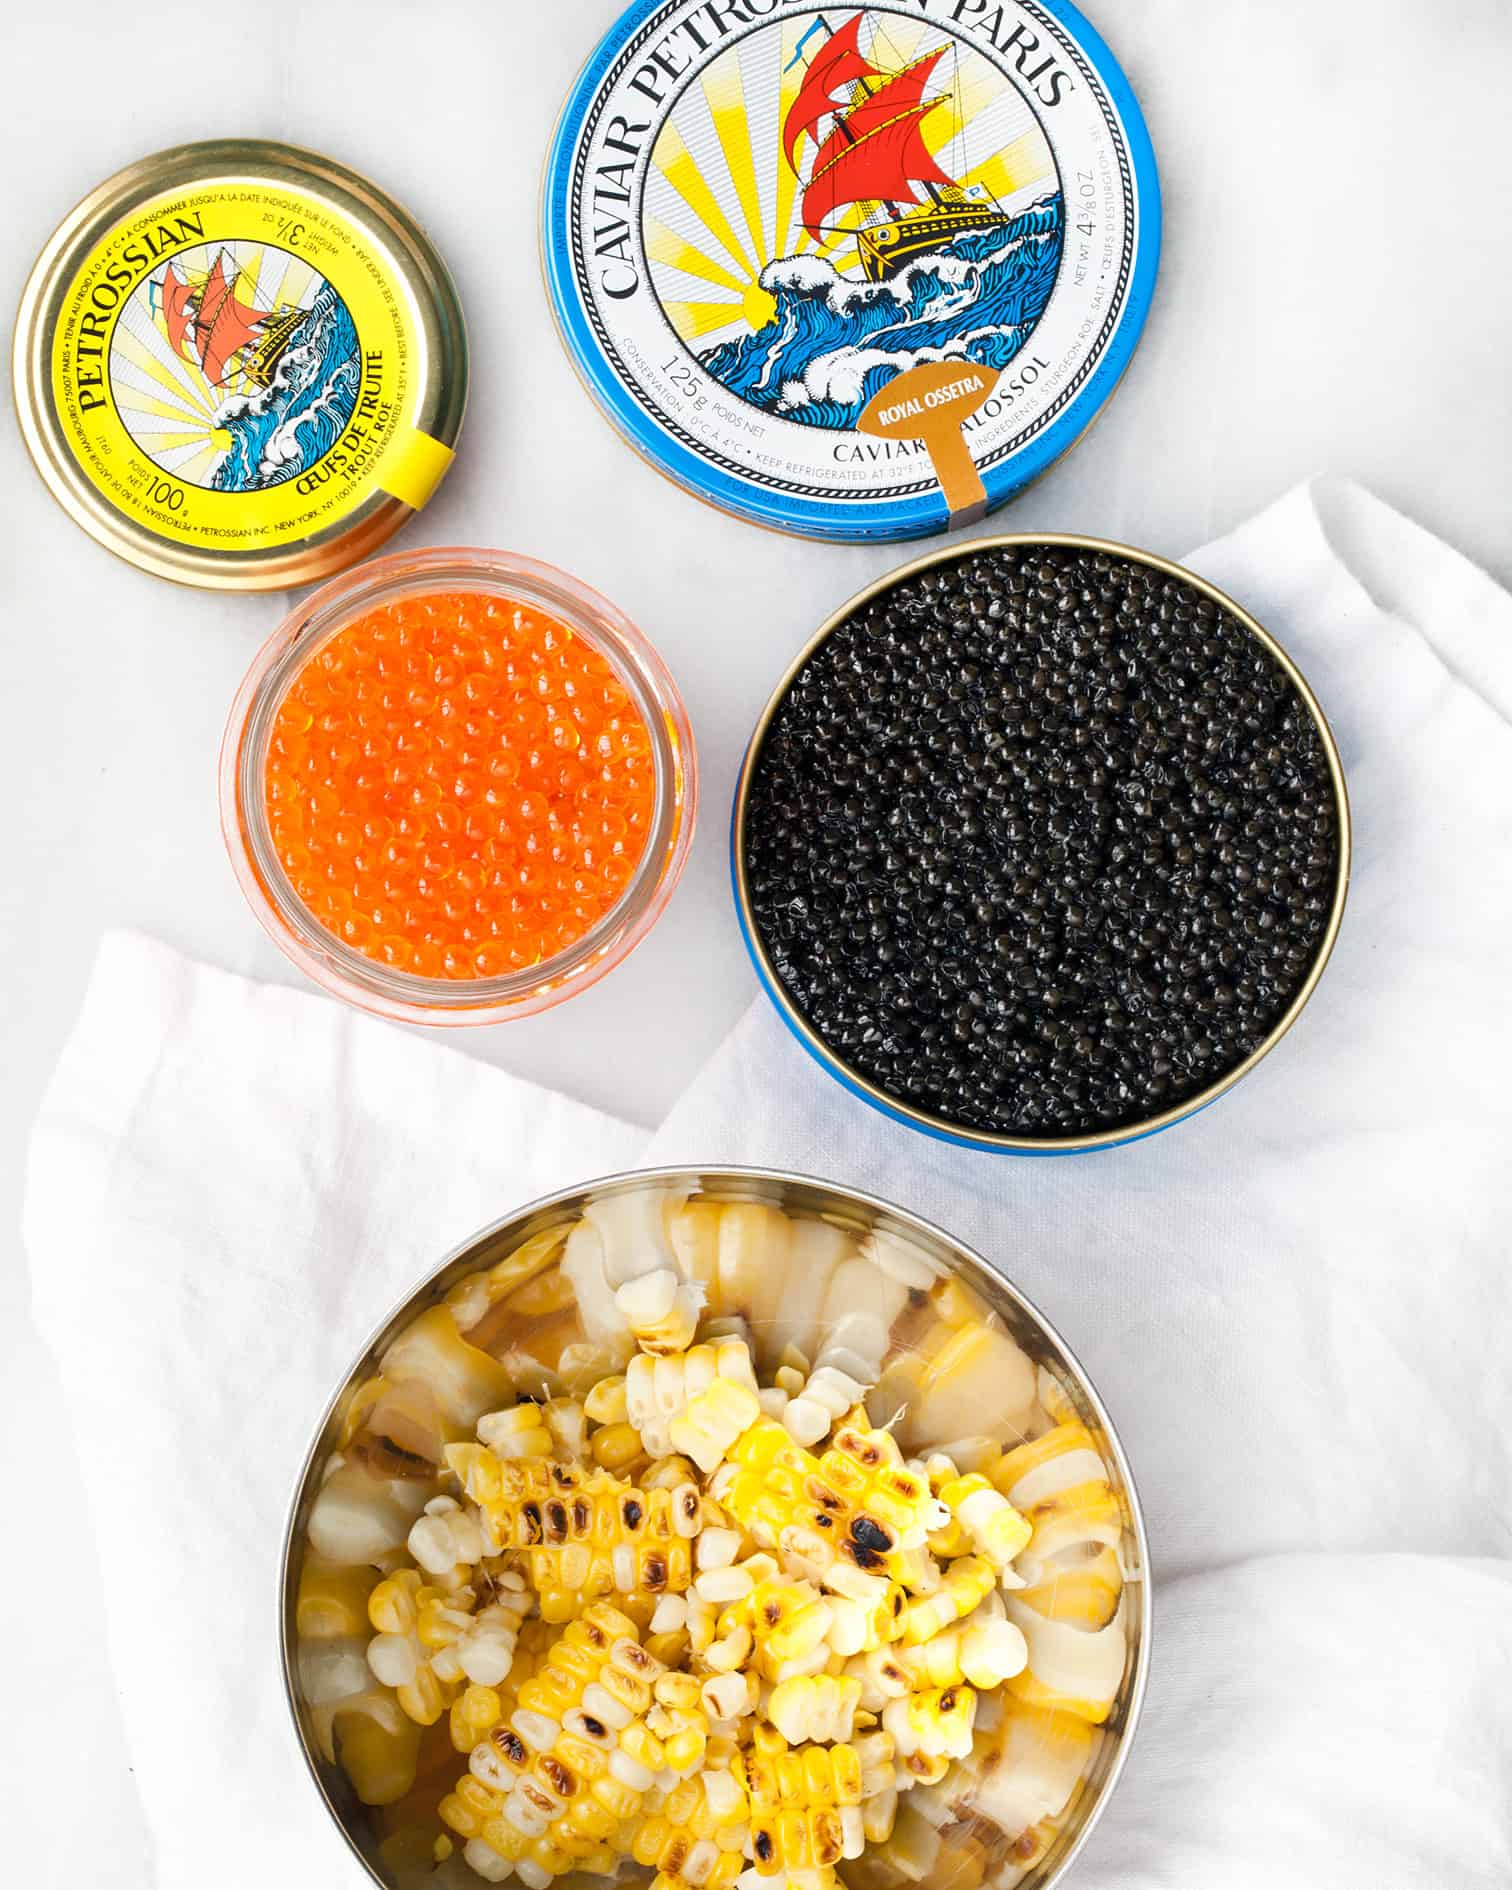 Grilled Corn & Caviar Deviled Eggs